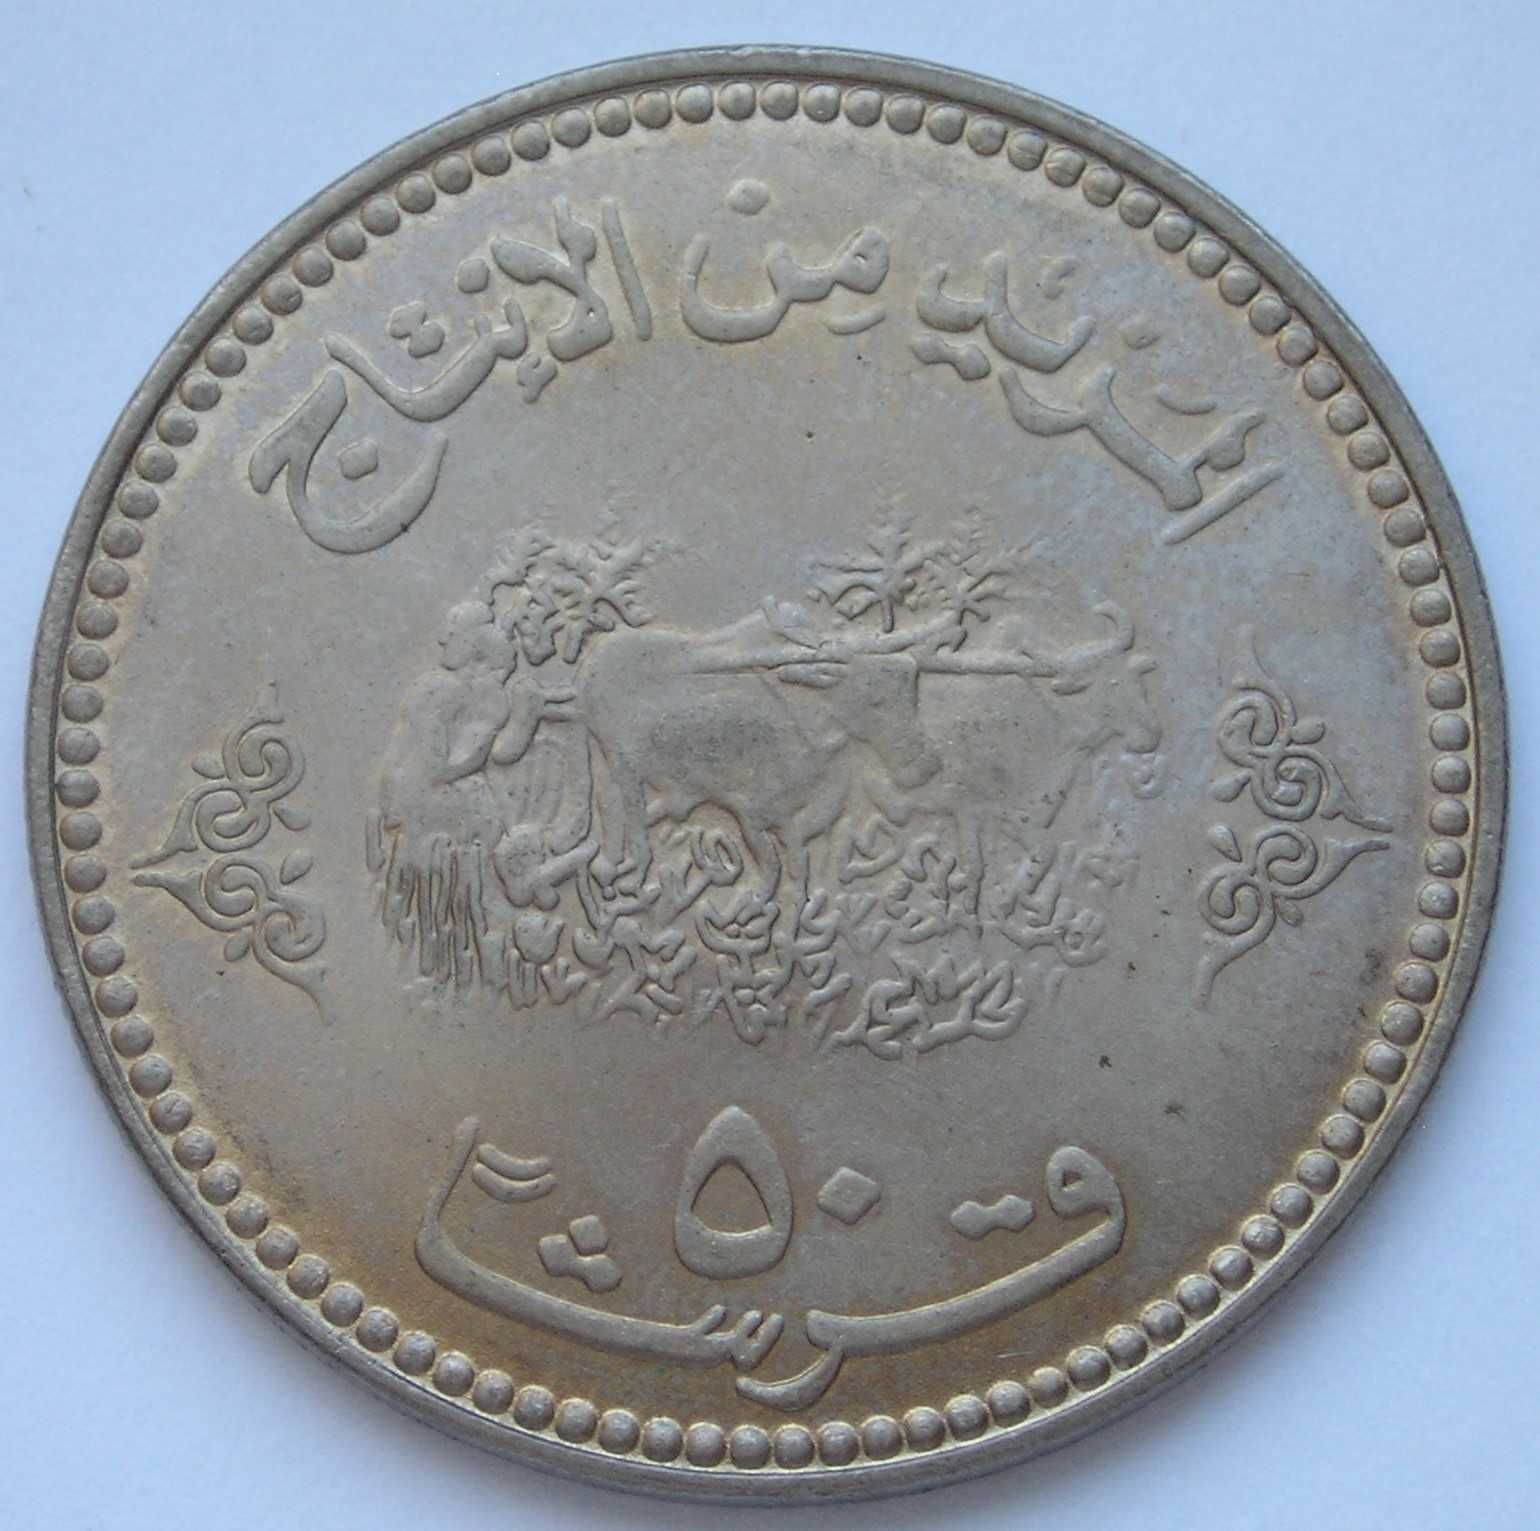 Sudan 50 ghirsh 1972 - stan 1 -